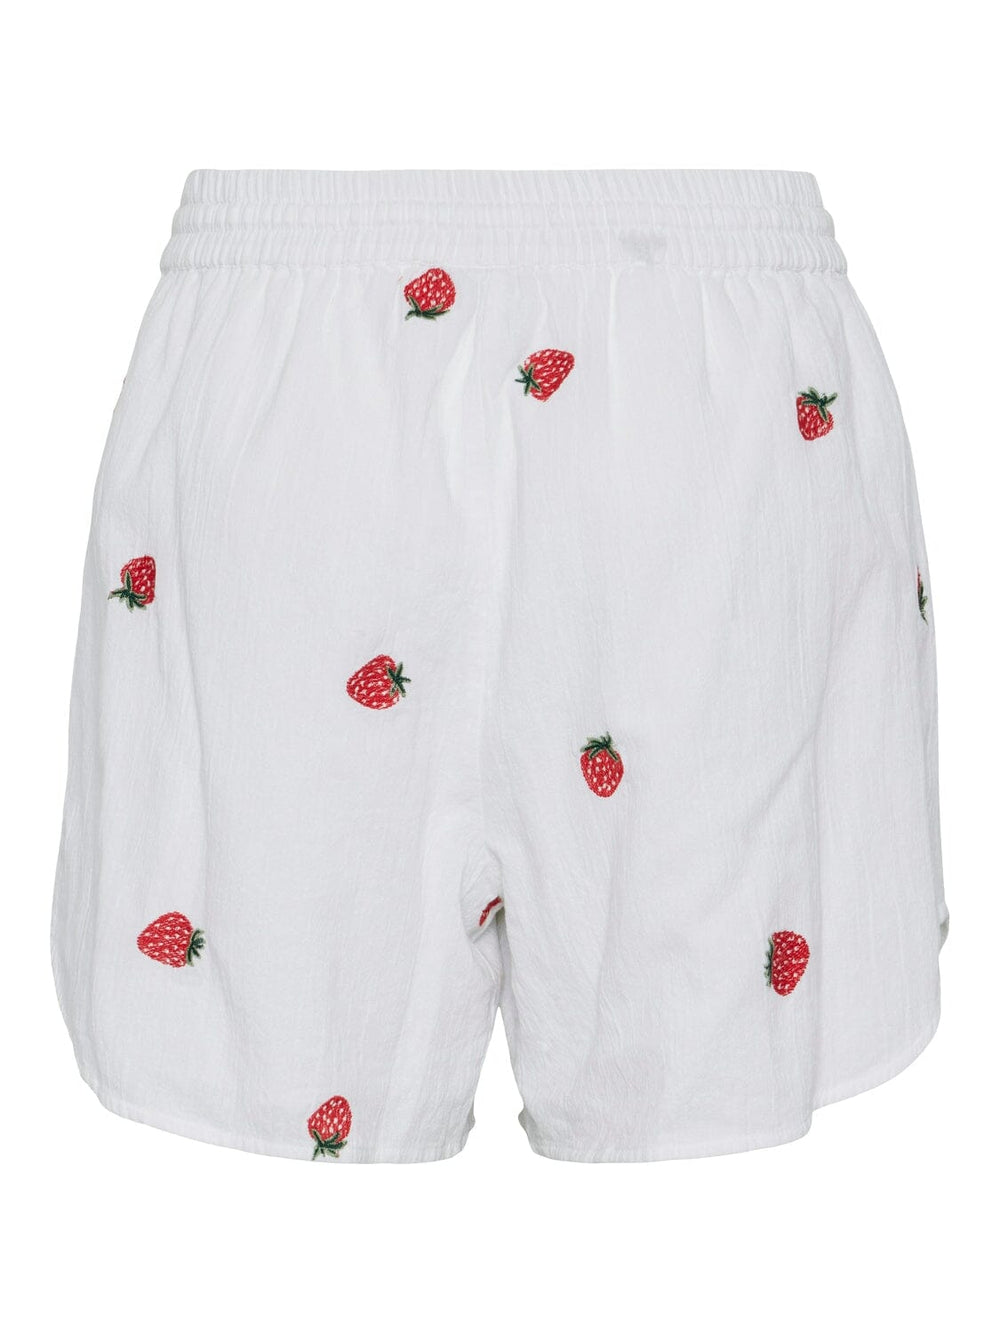 Pieces - Pcselena Shorts - 4625504 Bright White Strawberries Shorts 